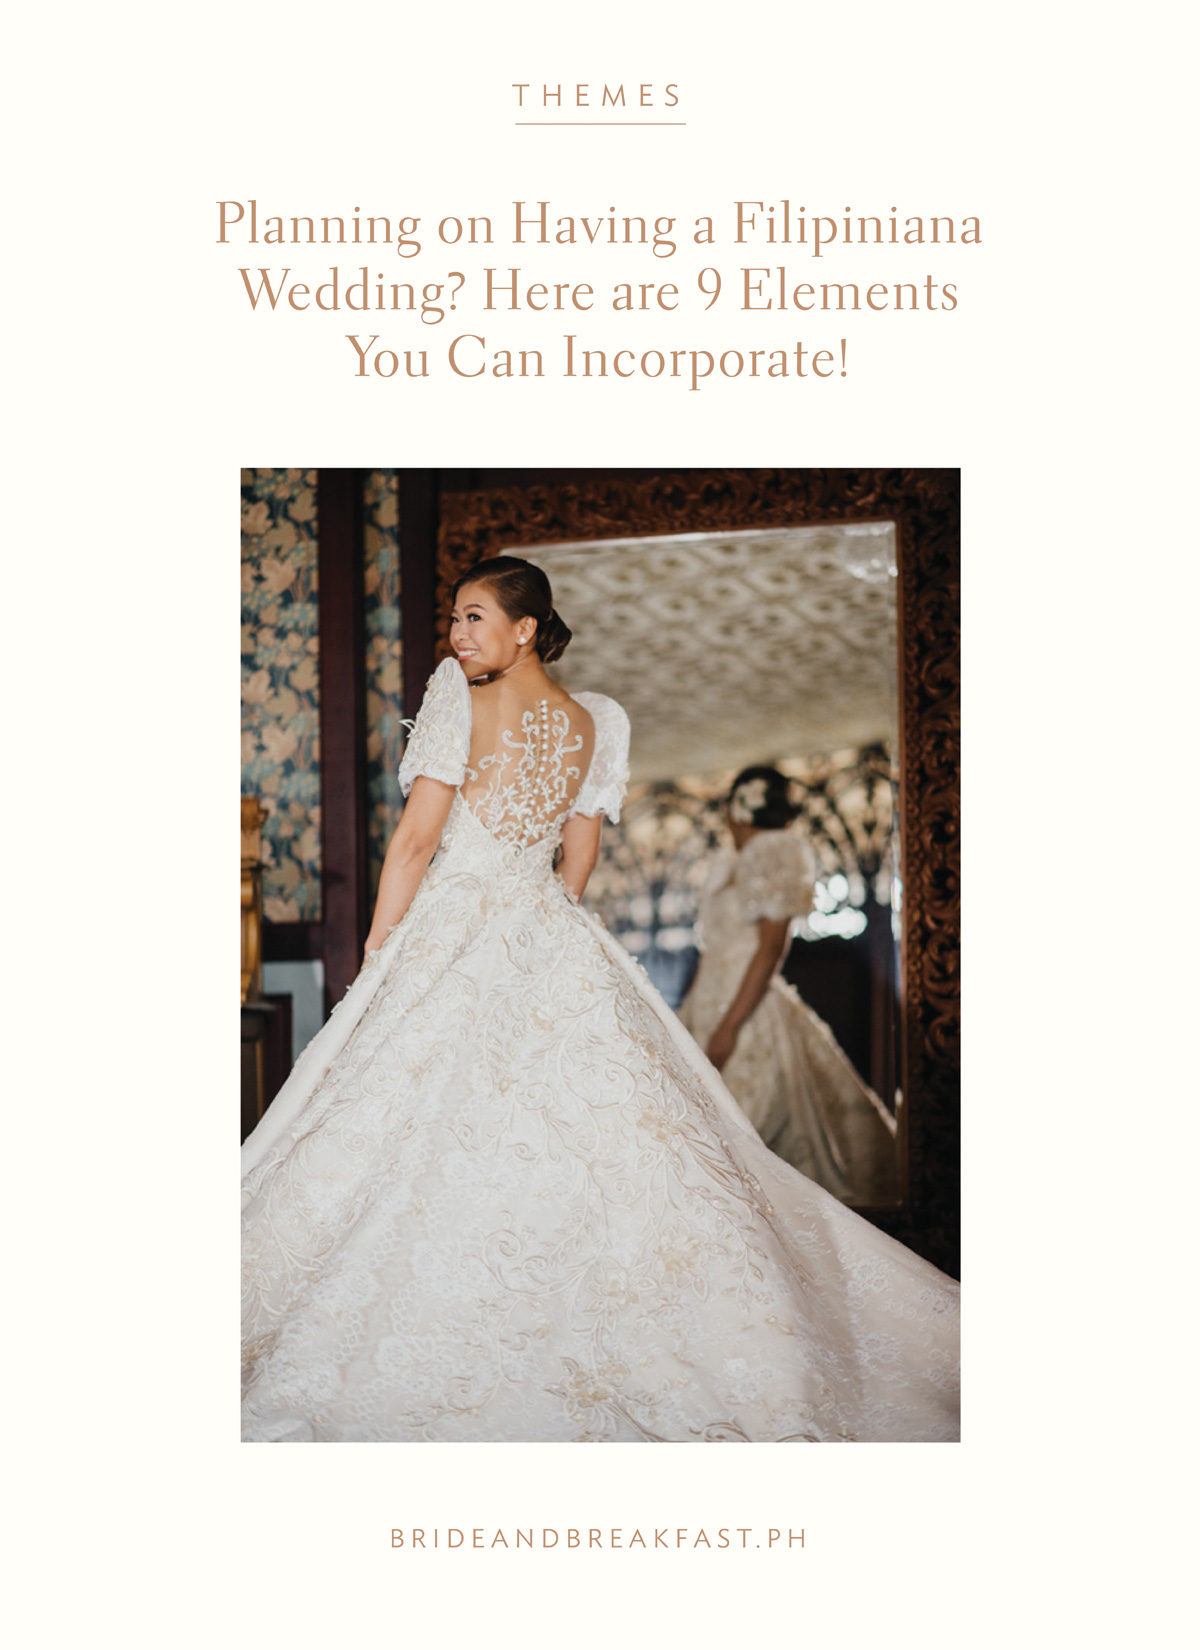 Elements For Filipiniana Wedding Philippines Wedding Blog